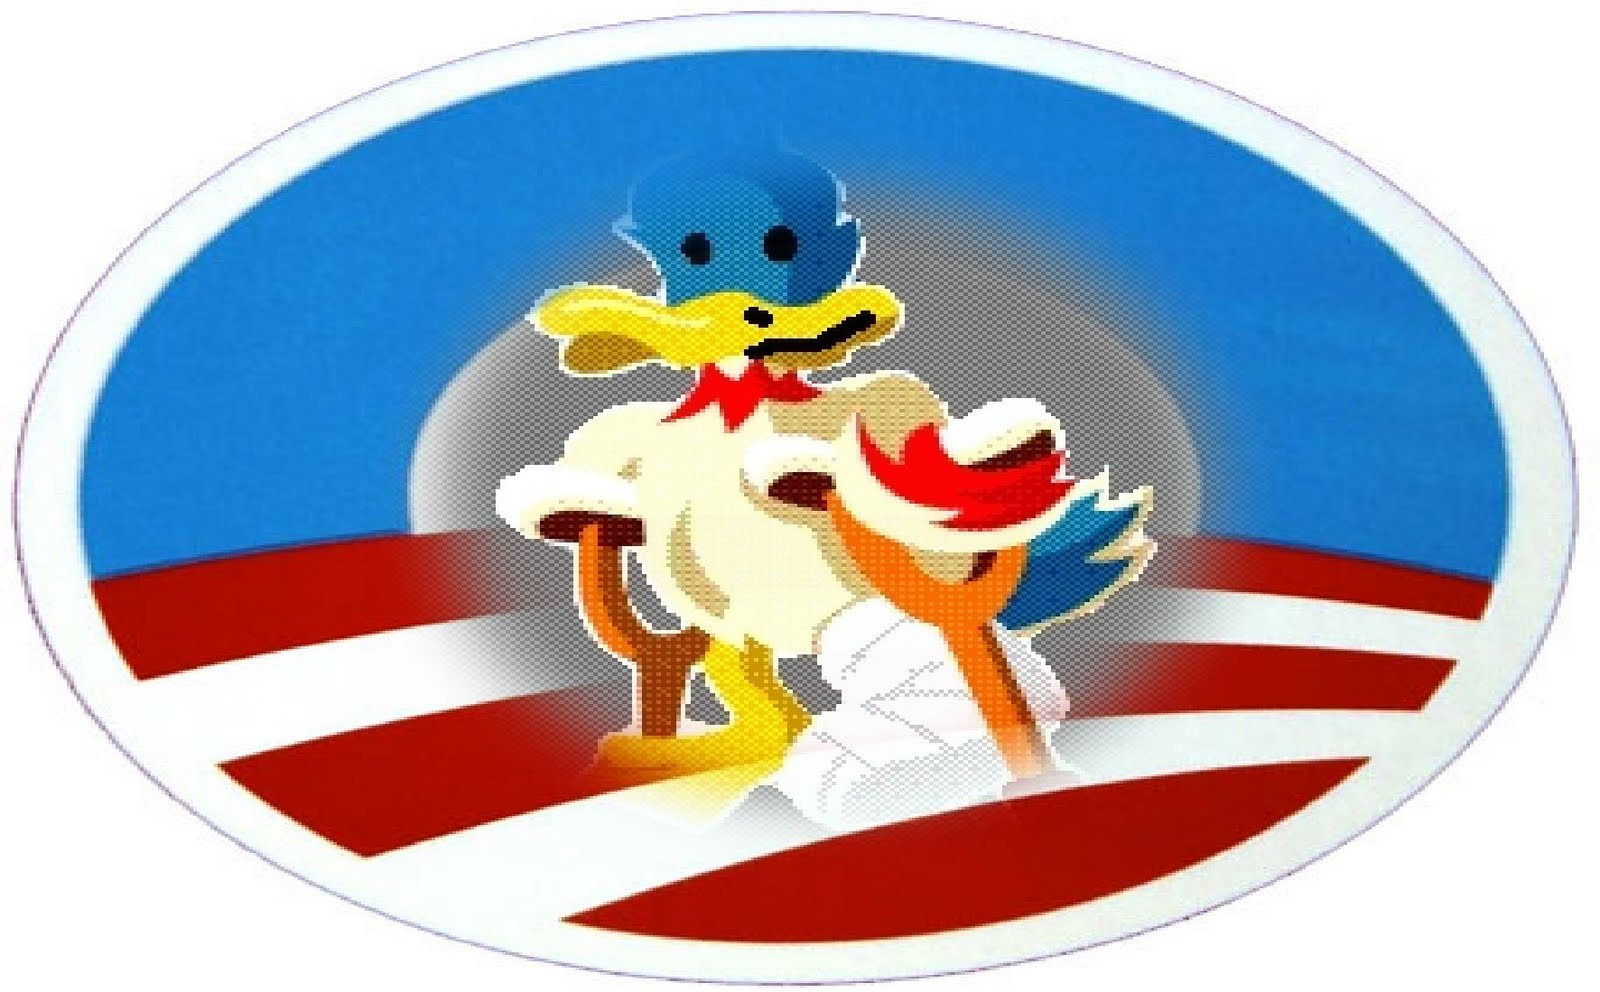 lame_duck_obama_background.jpg